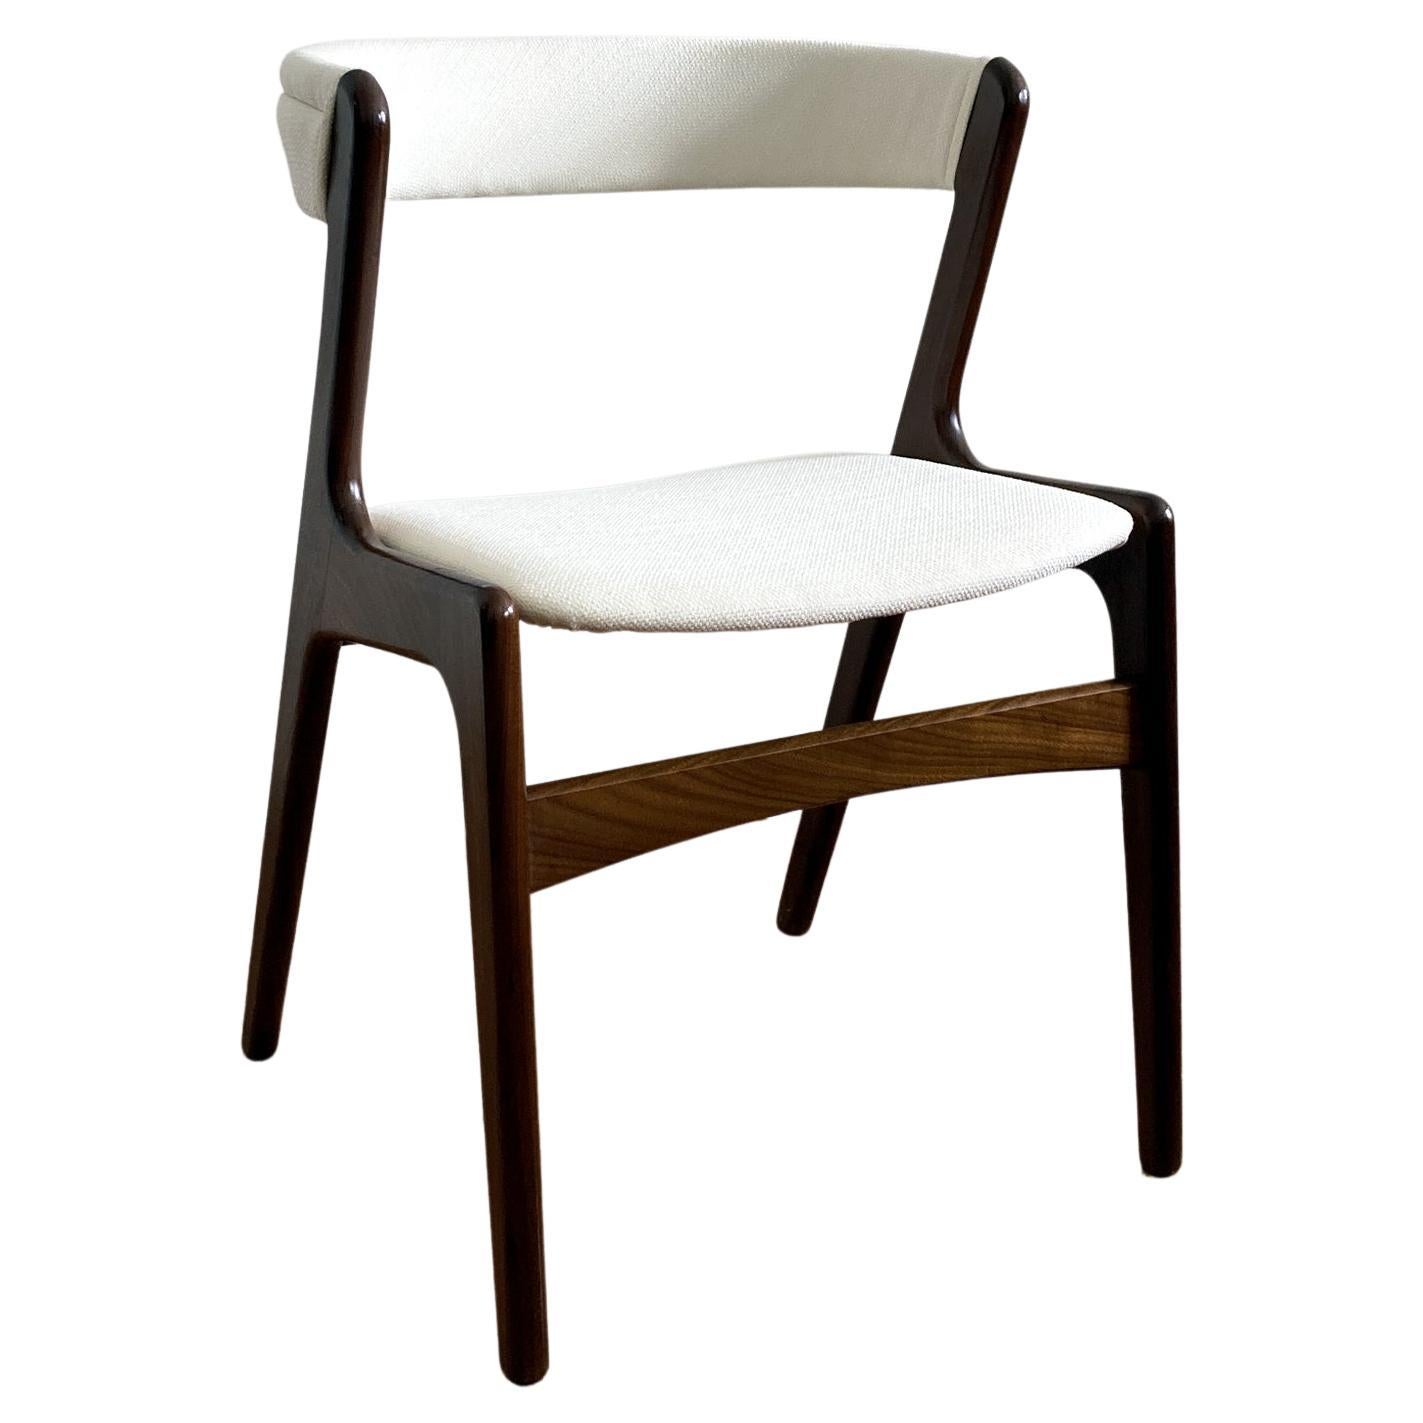 Kai Kristiansen Ivory Tweed Curved Back Teak Chair, Danish, 1960s For Sale